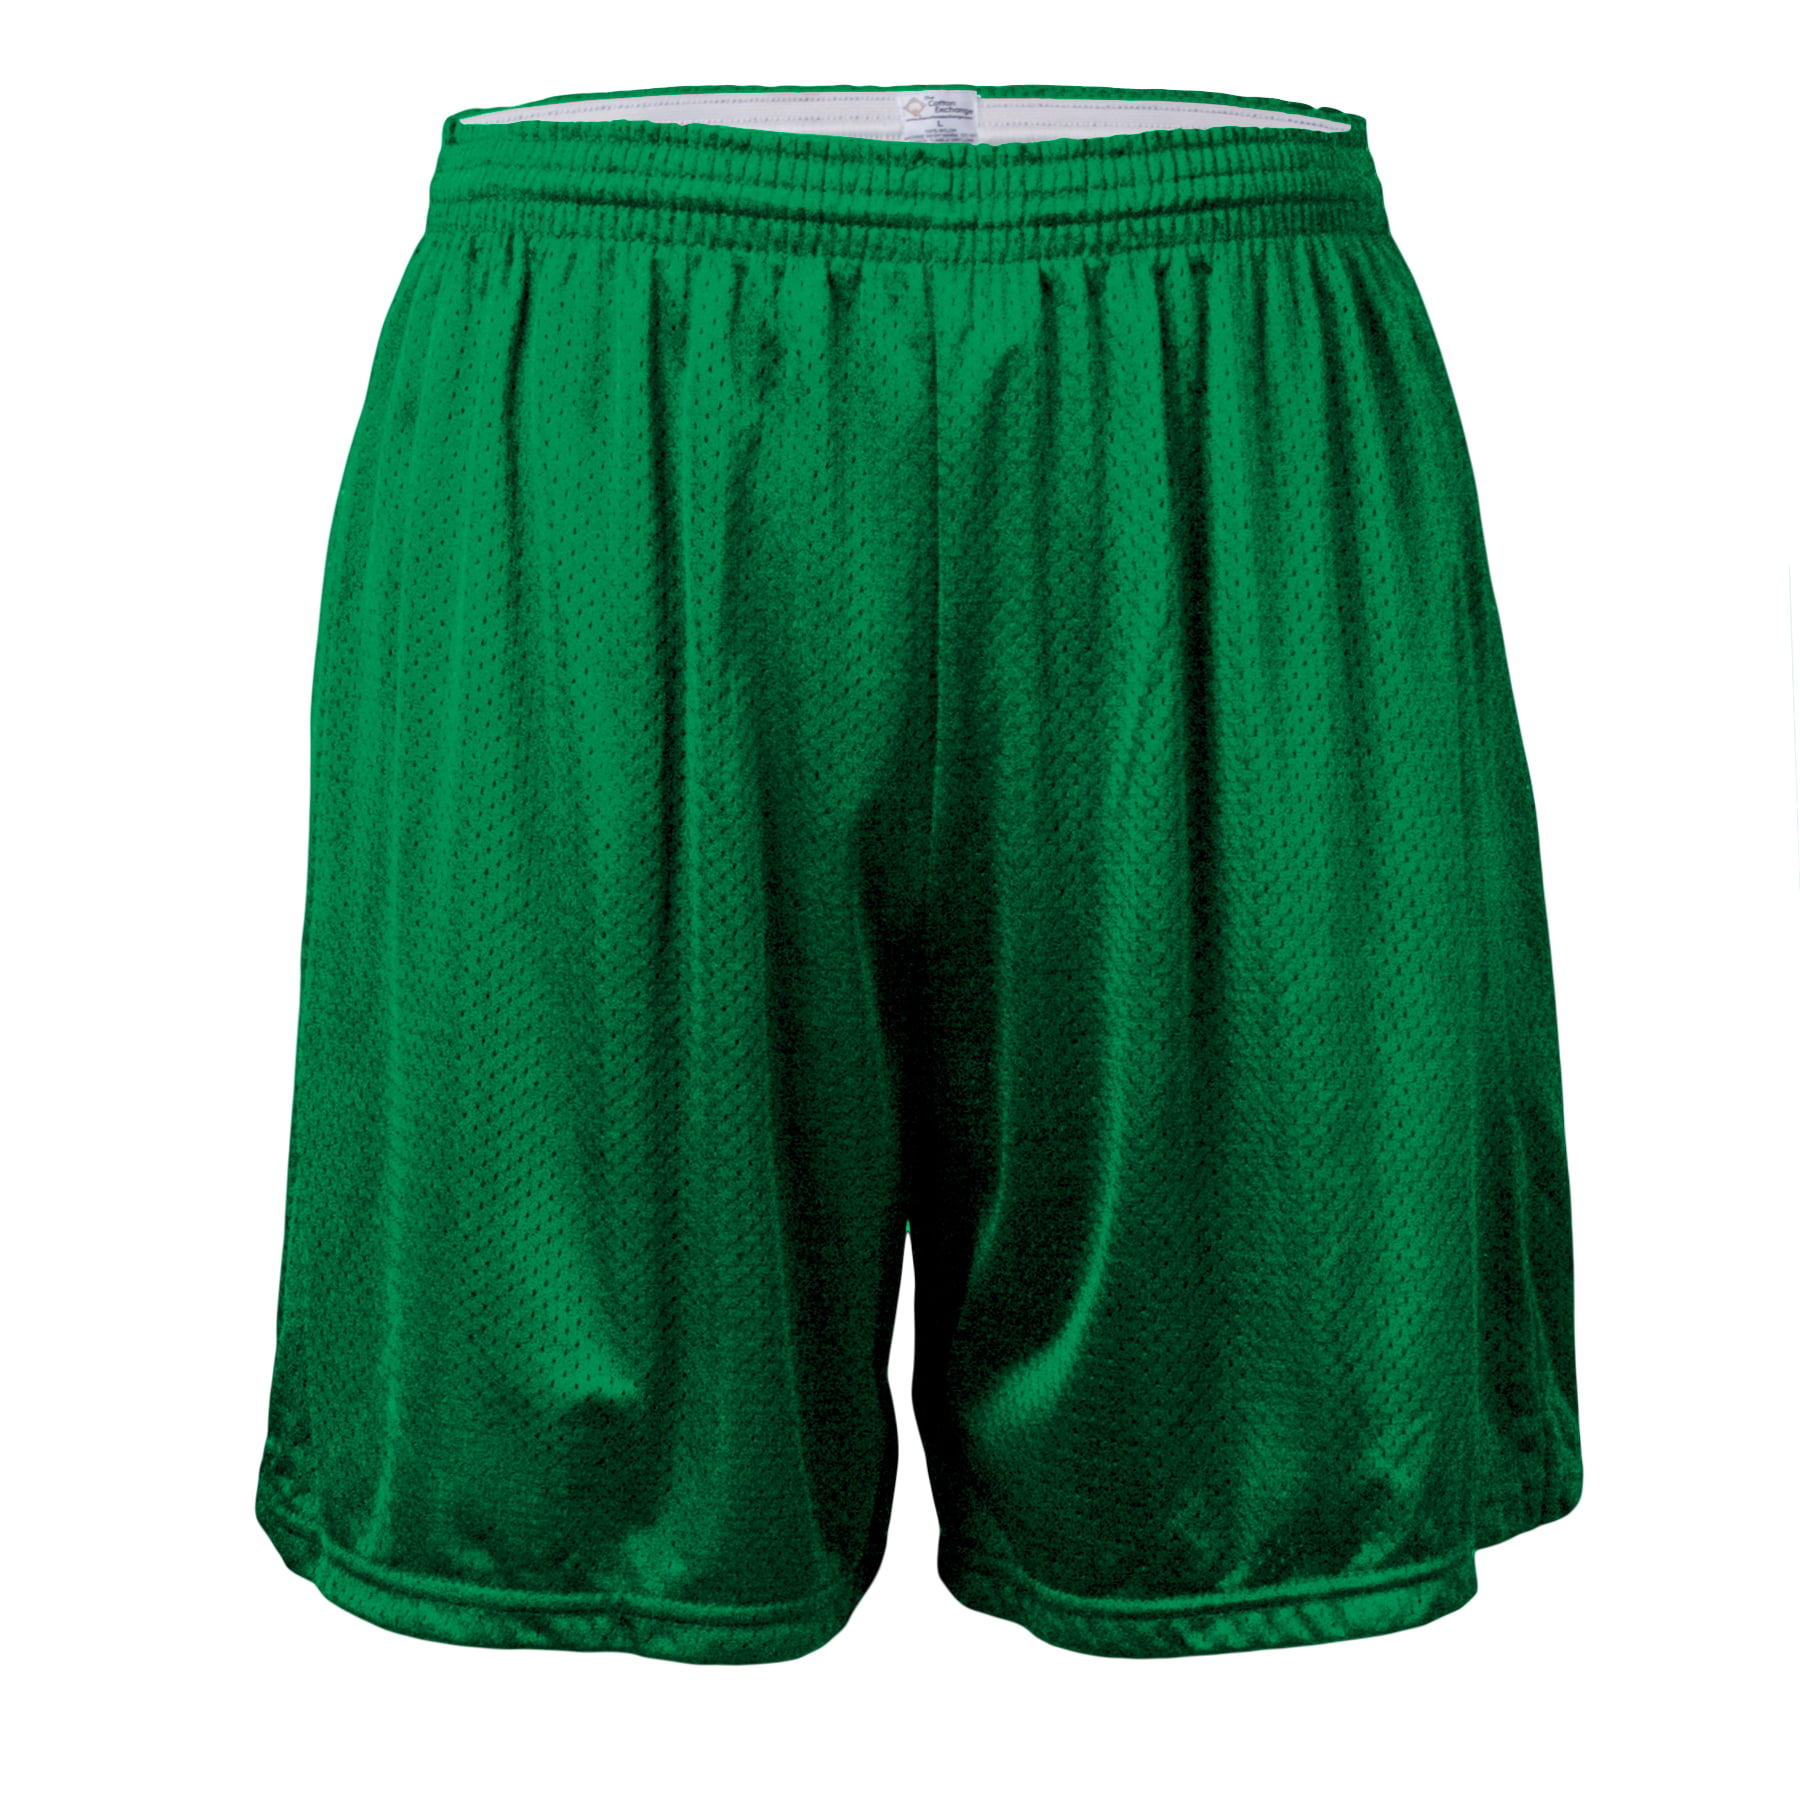 Soffe C1770ABS Adult Mesh Shorts - Walmart.com